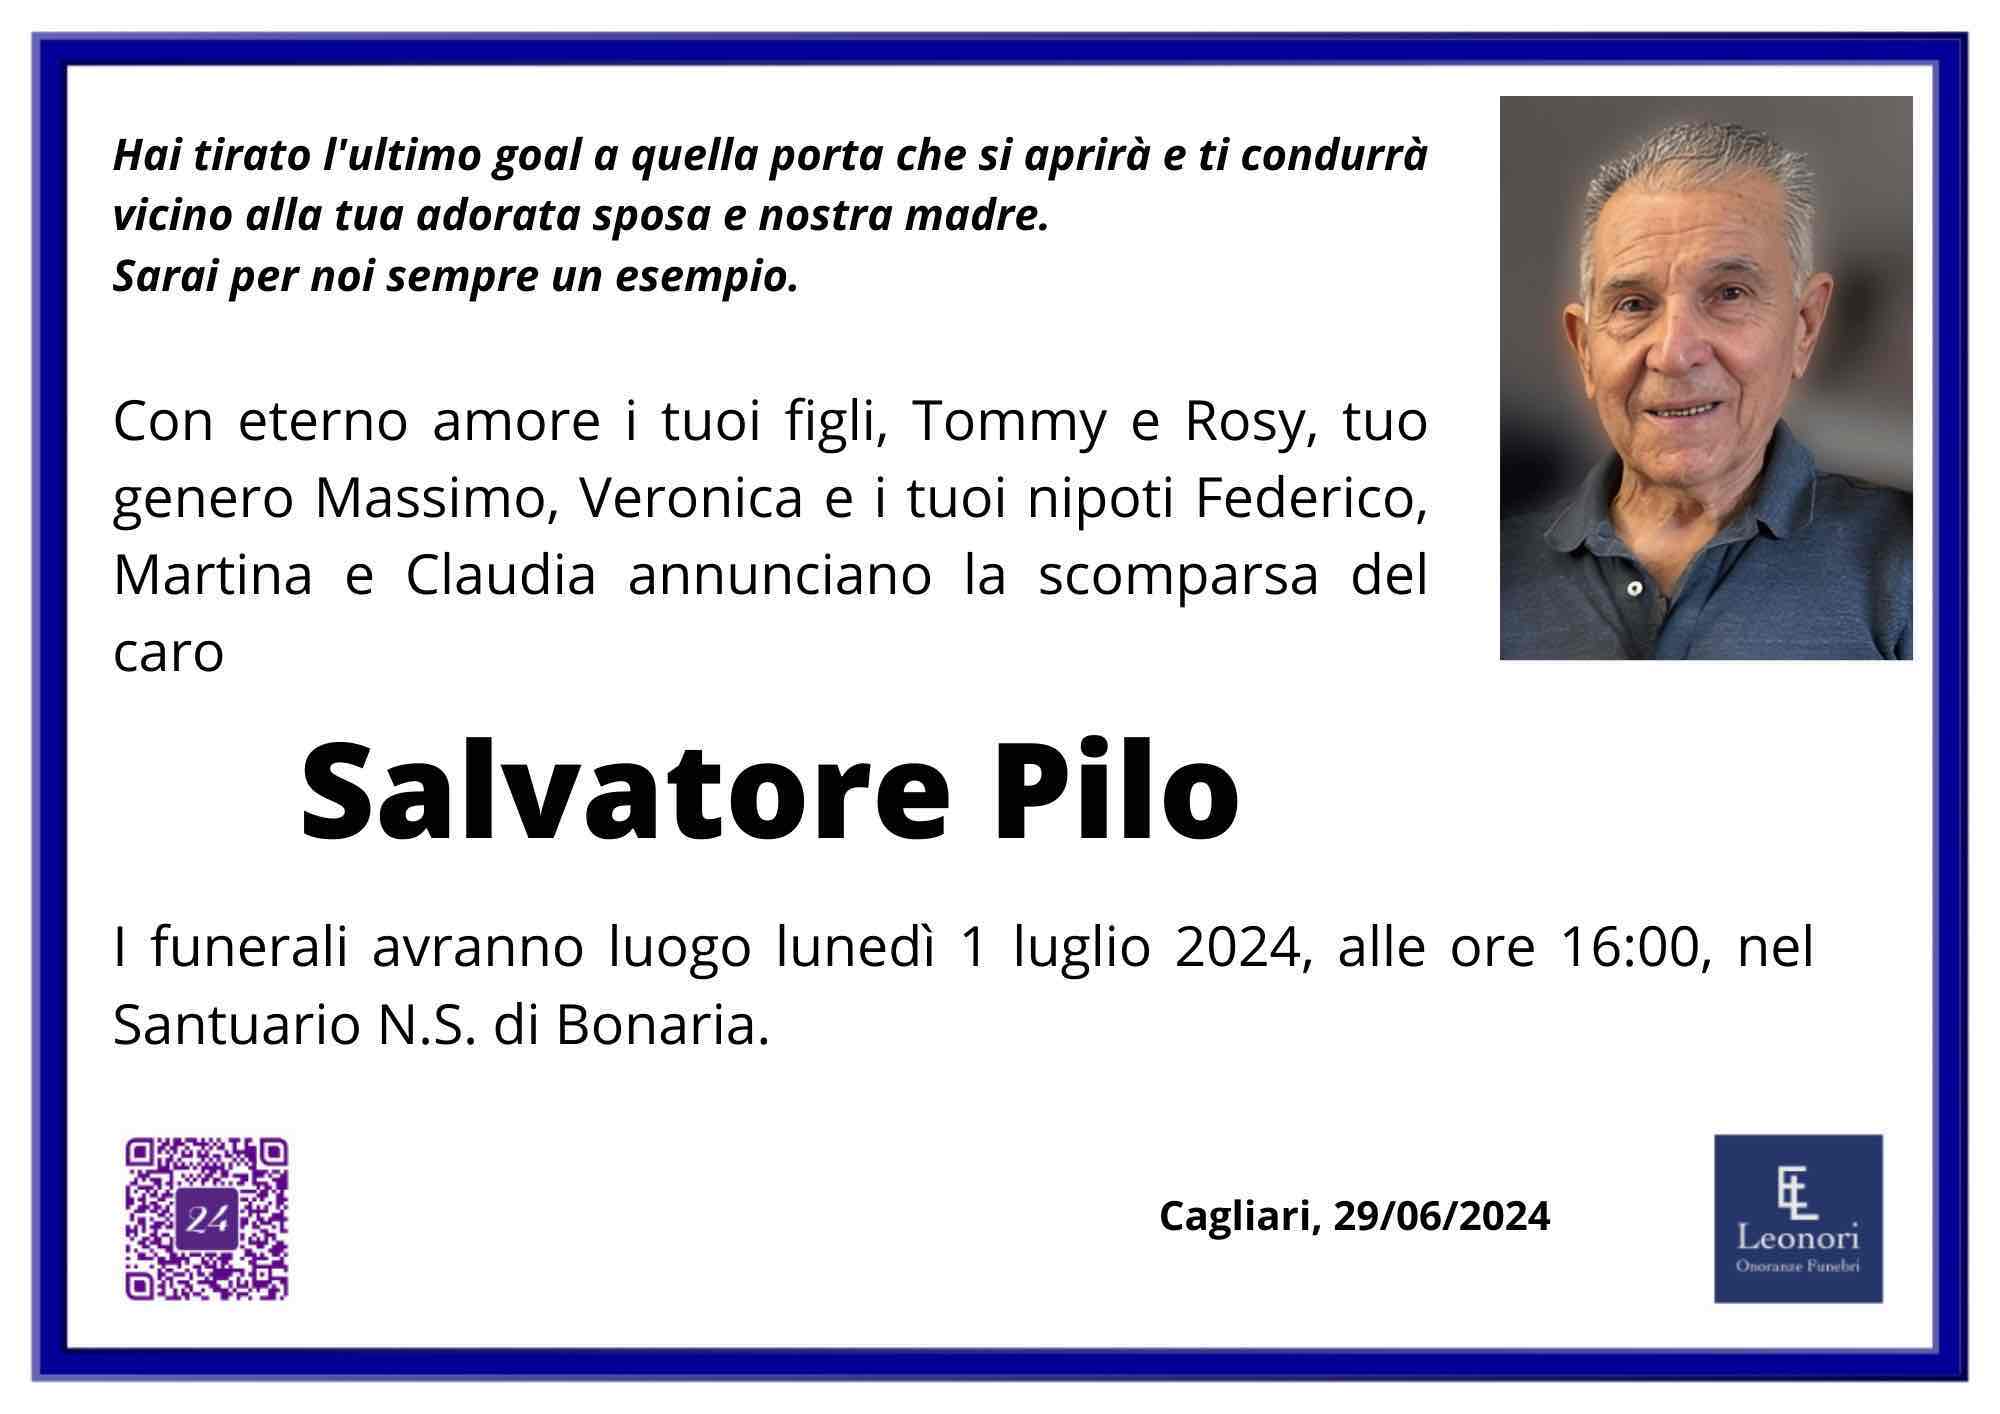 Salvatore Pilo